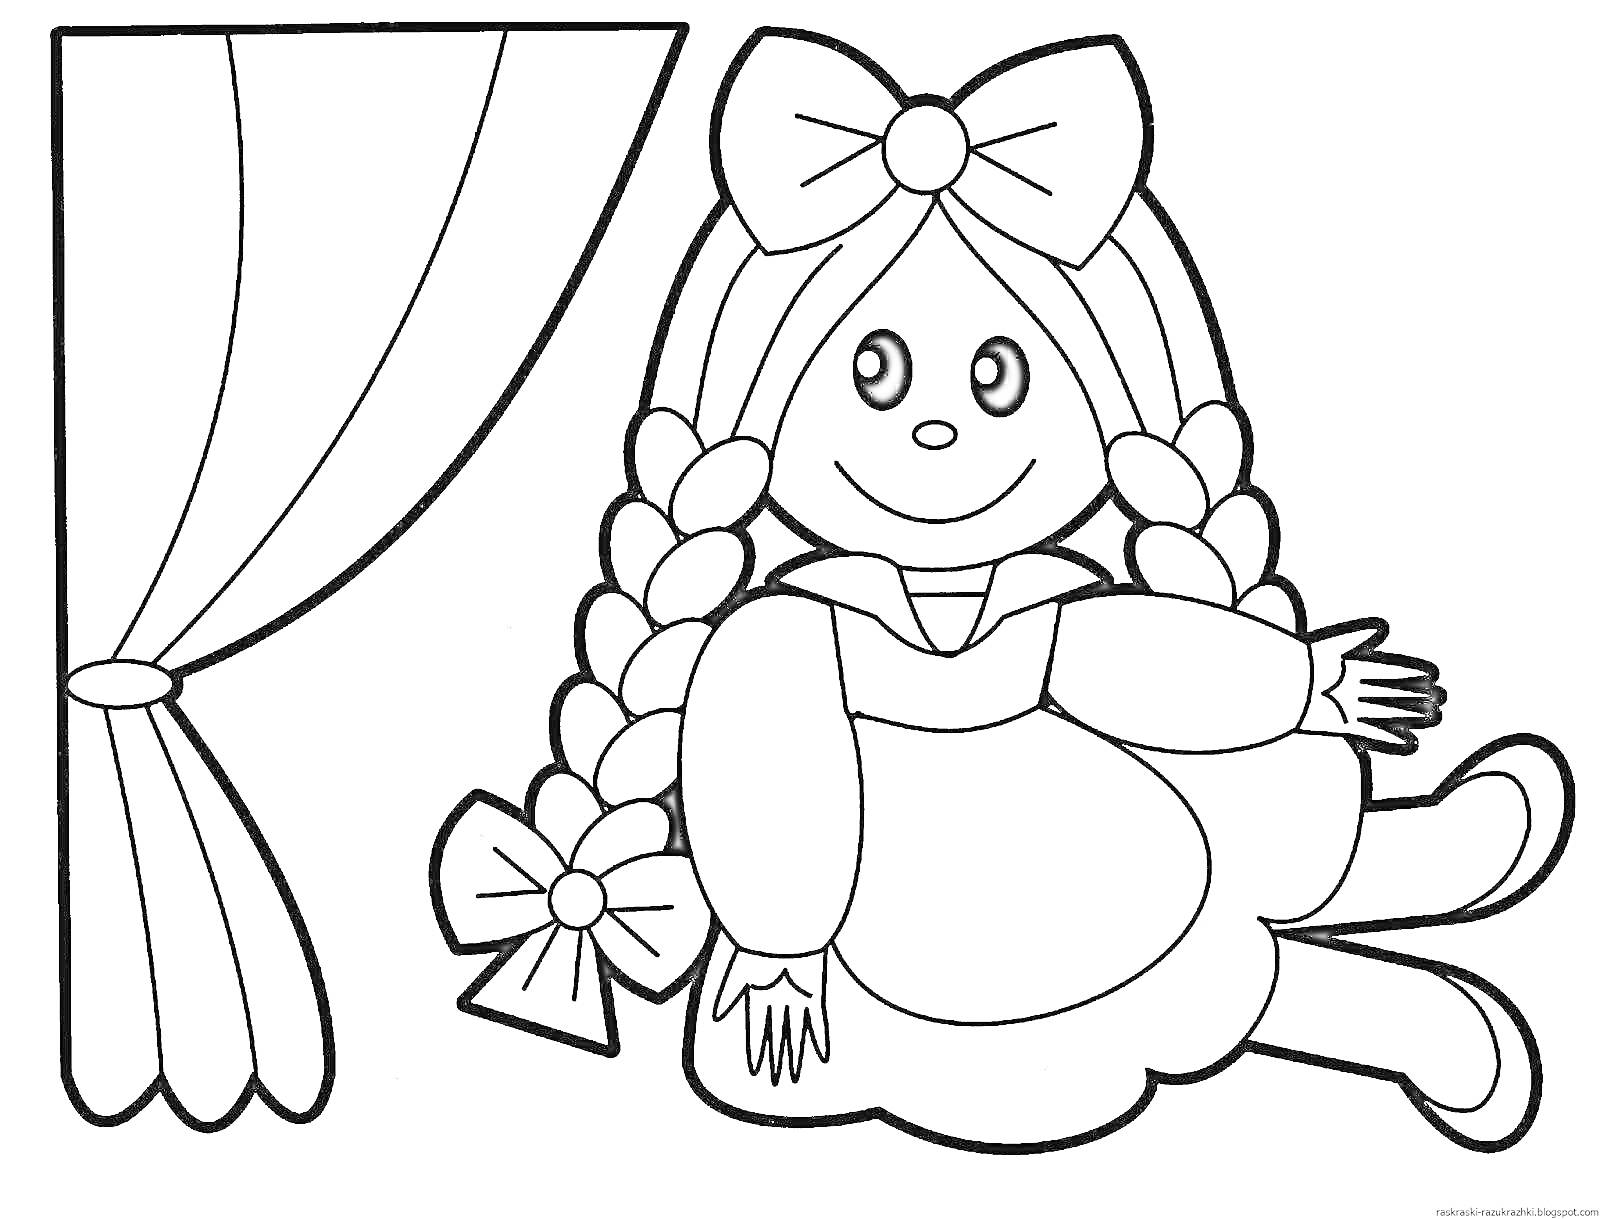 Раскраска Кукла с косичками и бантиками рядом с занавеской